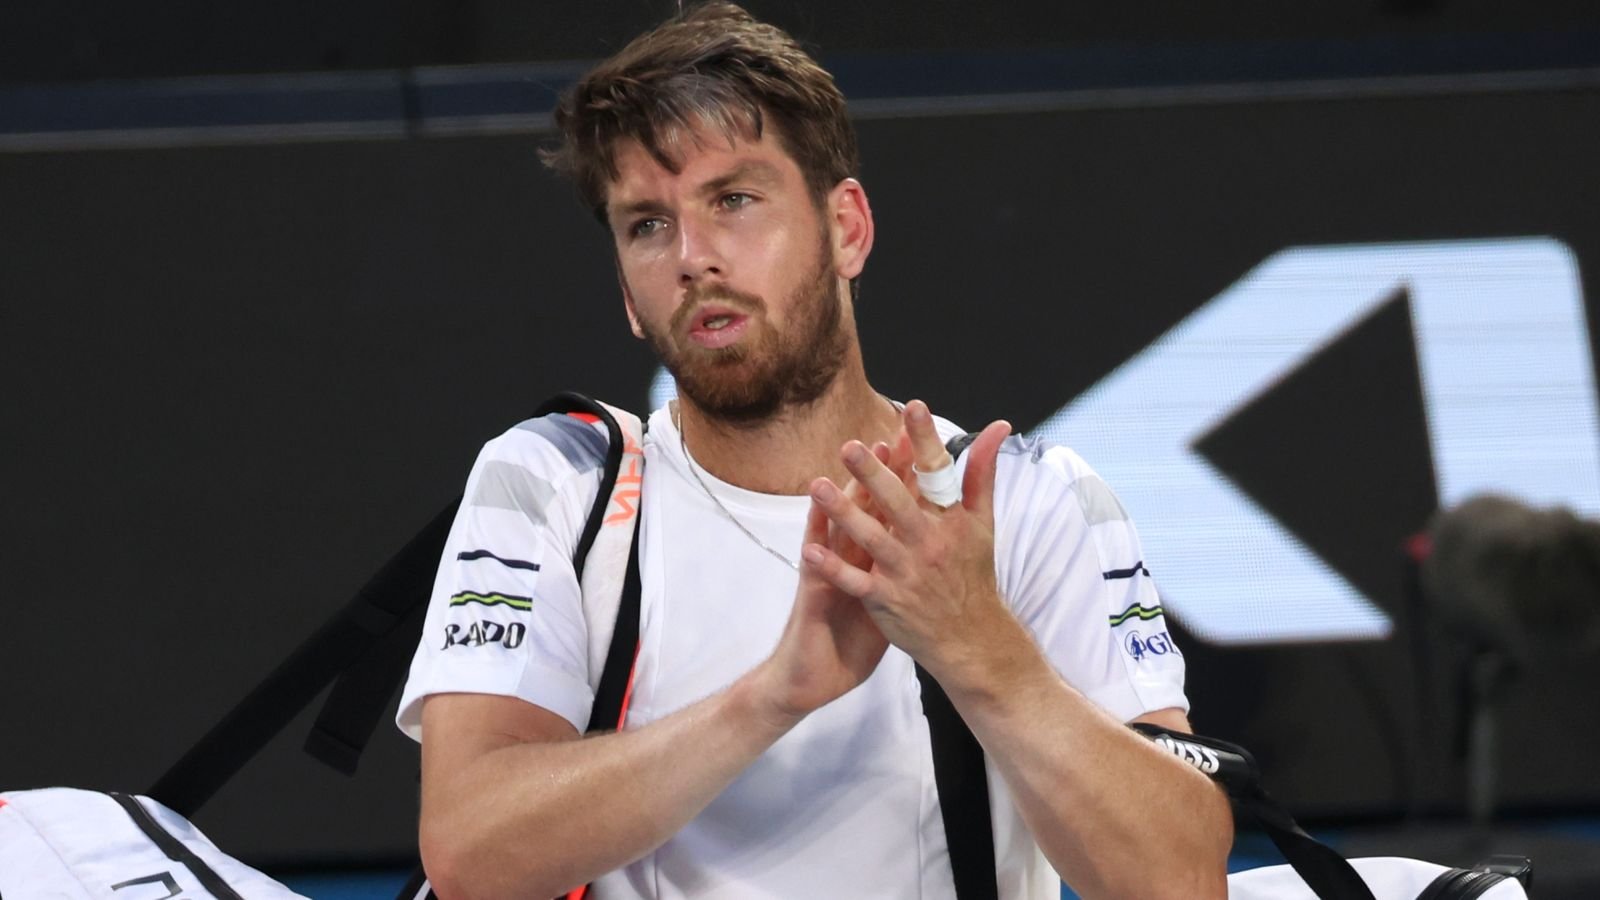 Australian Open: Cameron Norrie targets return to world’s top 10 after spirited defeat to Alexander Zverev | Tennis News